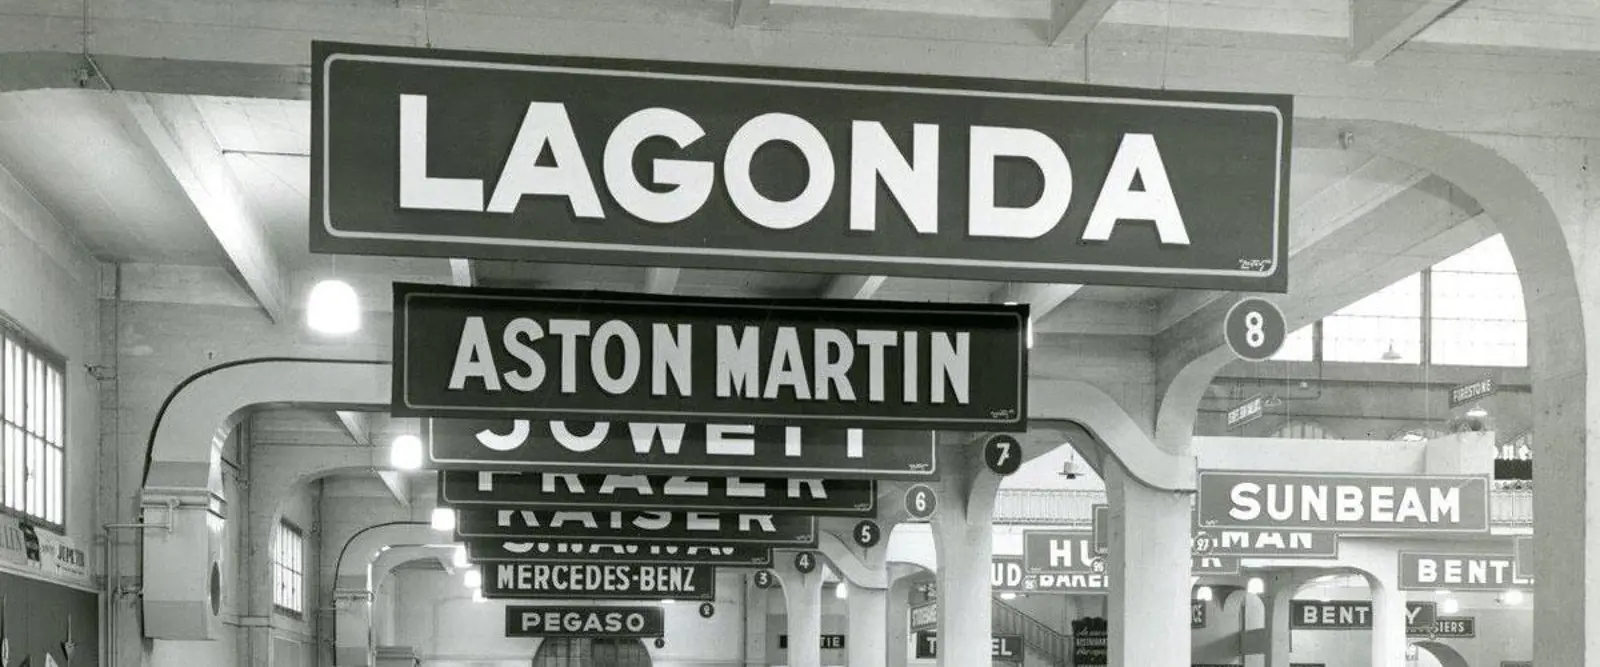 Lagonda - A History Or Innovation